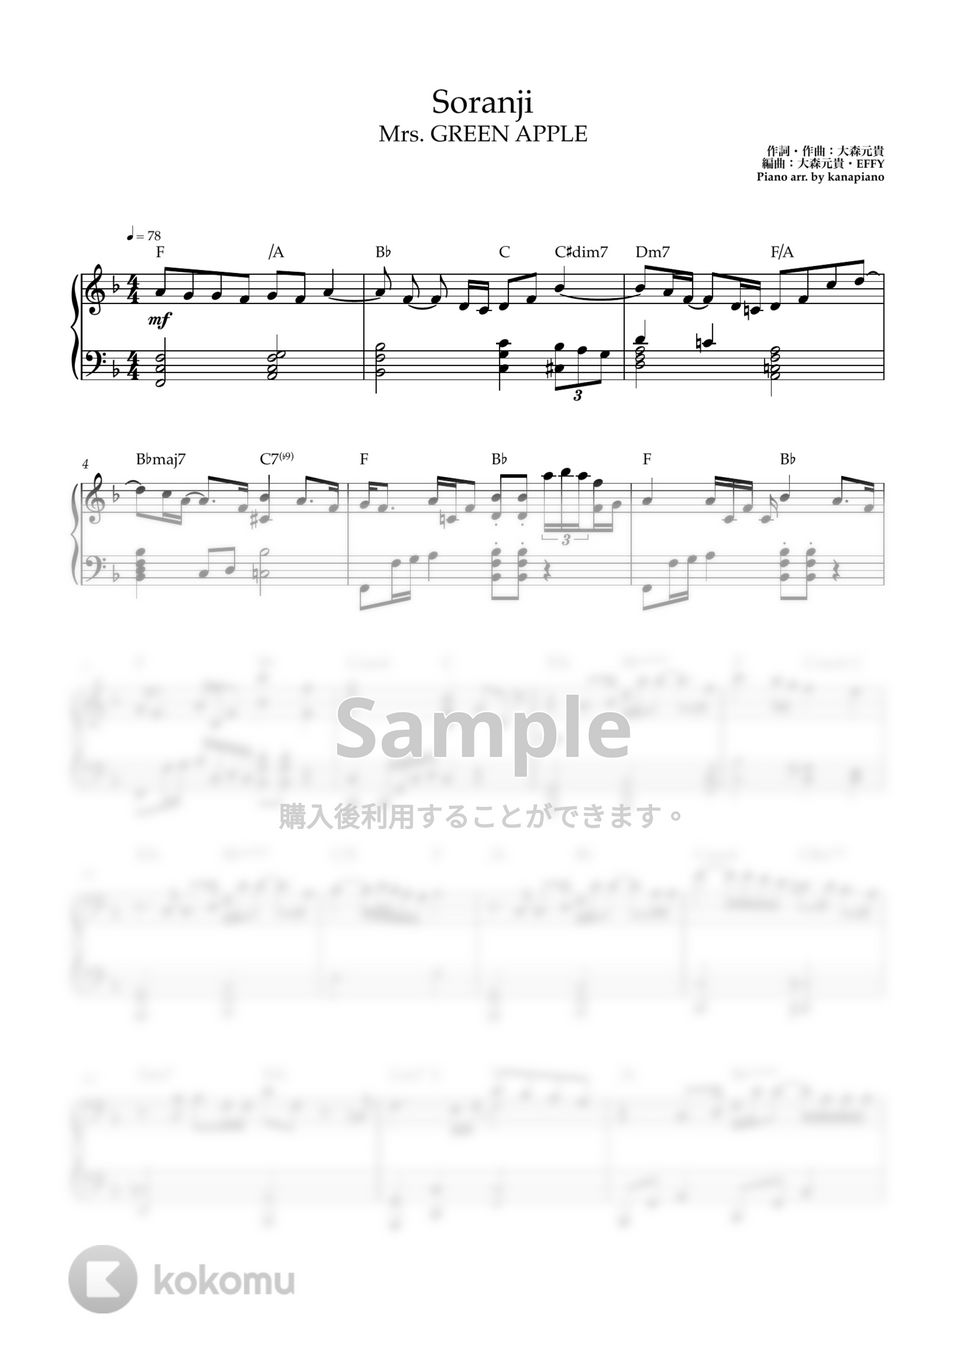 Mrs. GREEN APPLE - Soranji (ピアノ・ソロ/ラーゲリより愛を込めて) by kanapiano